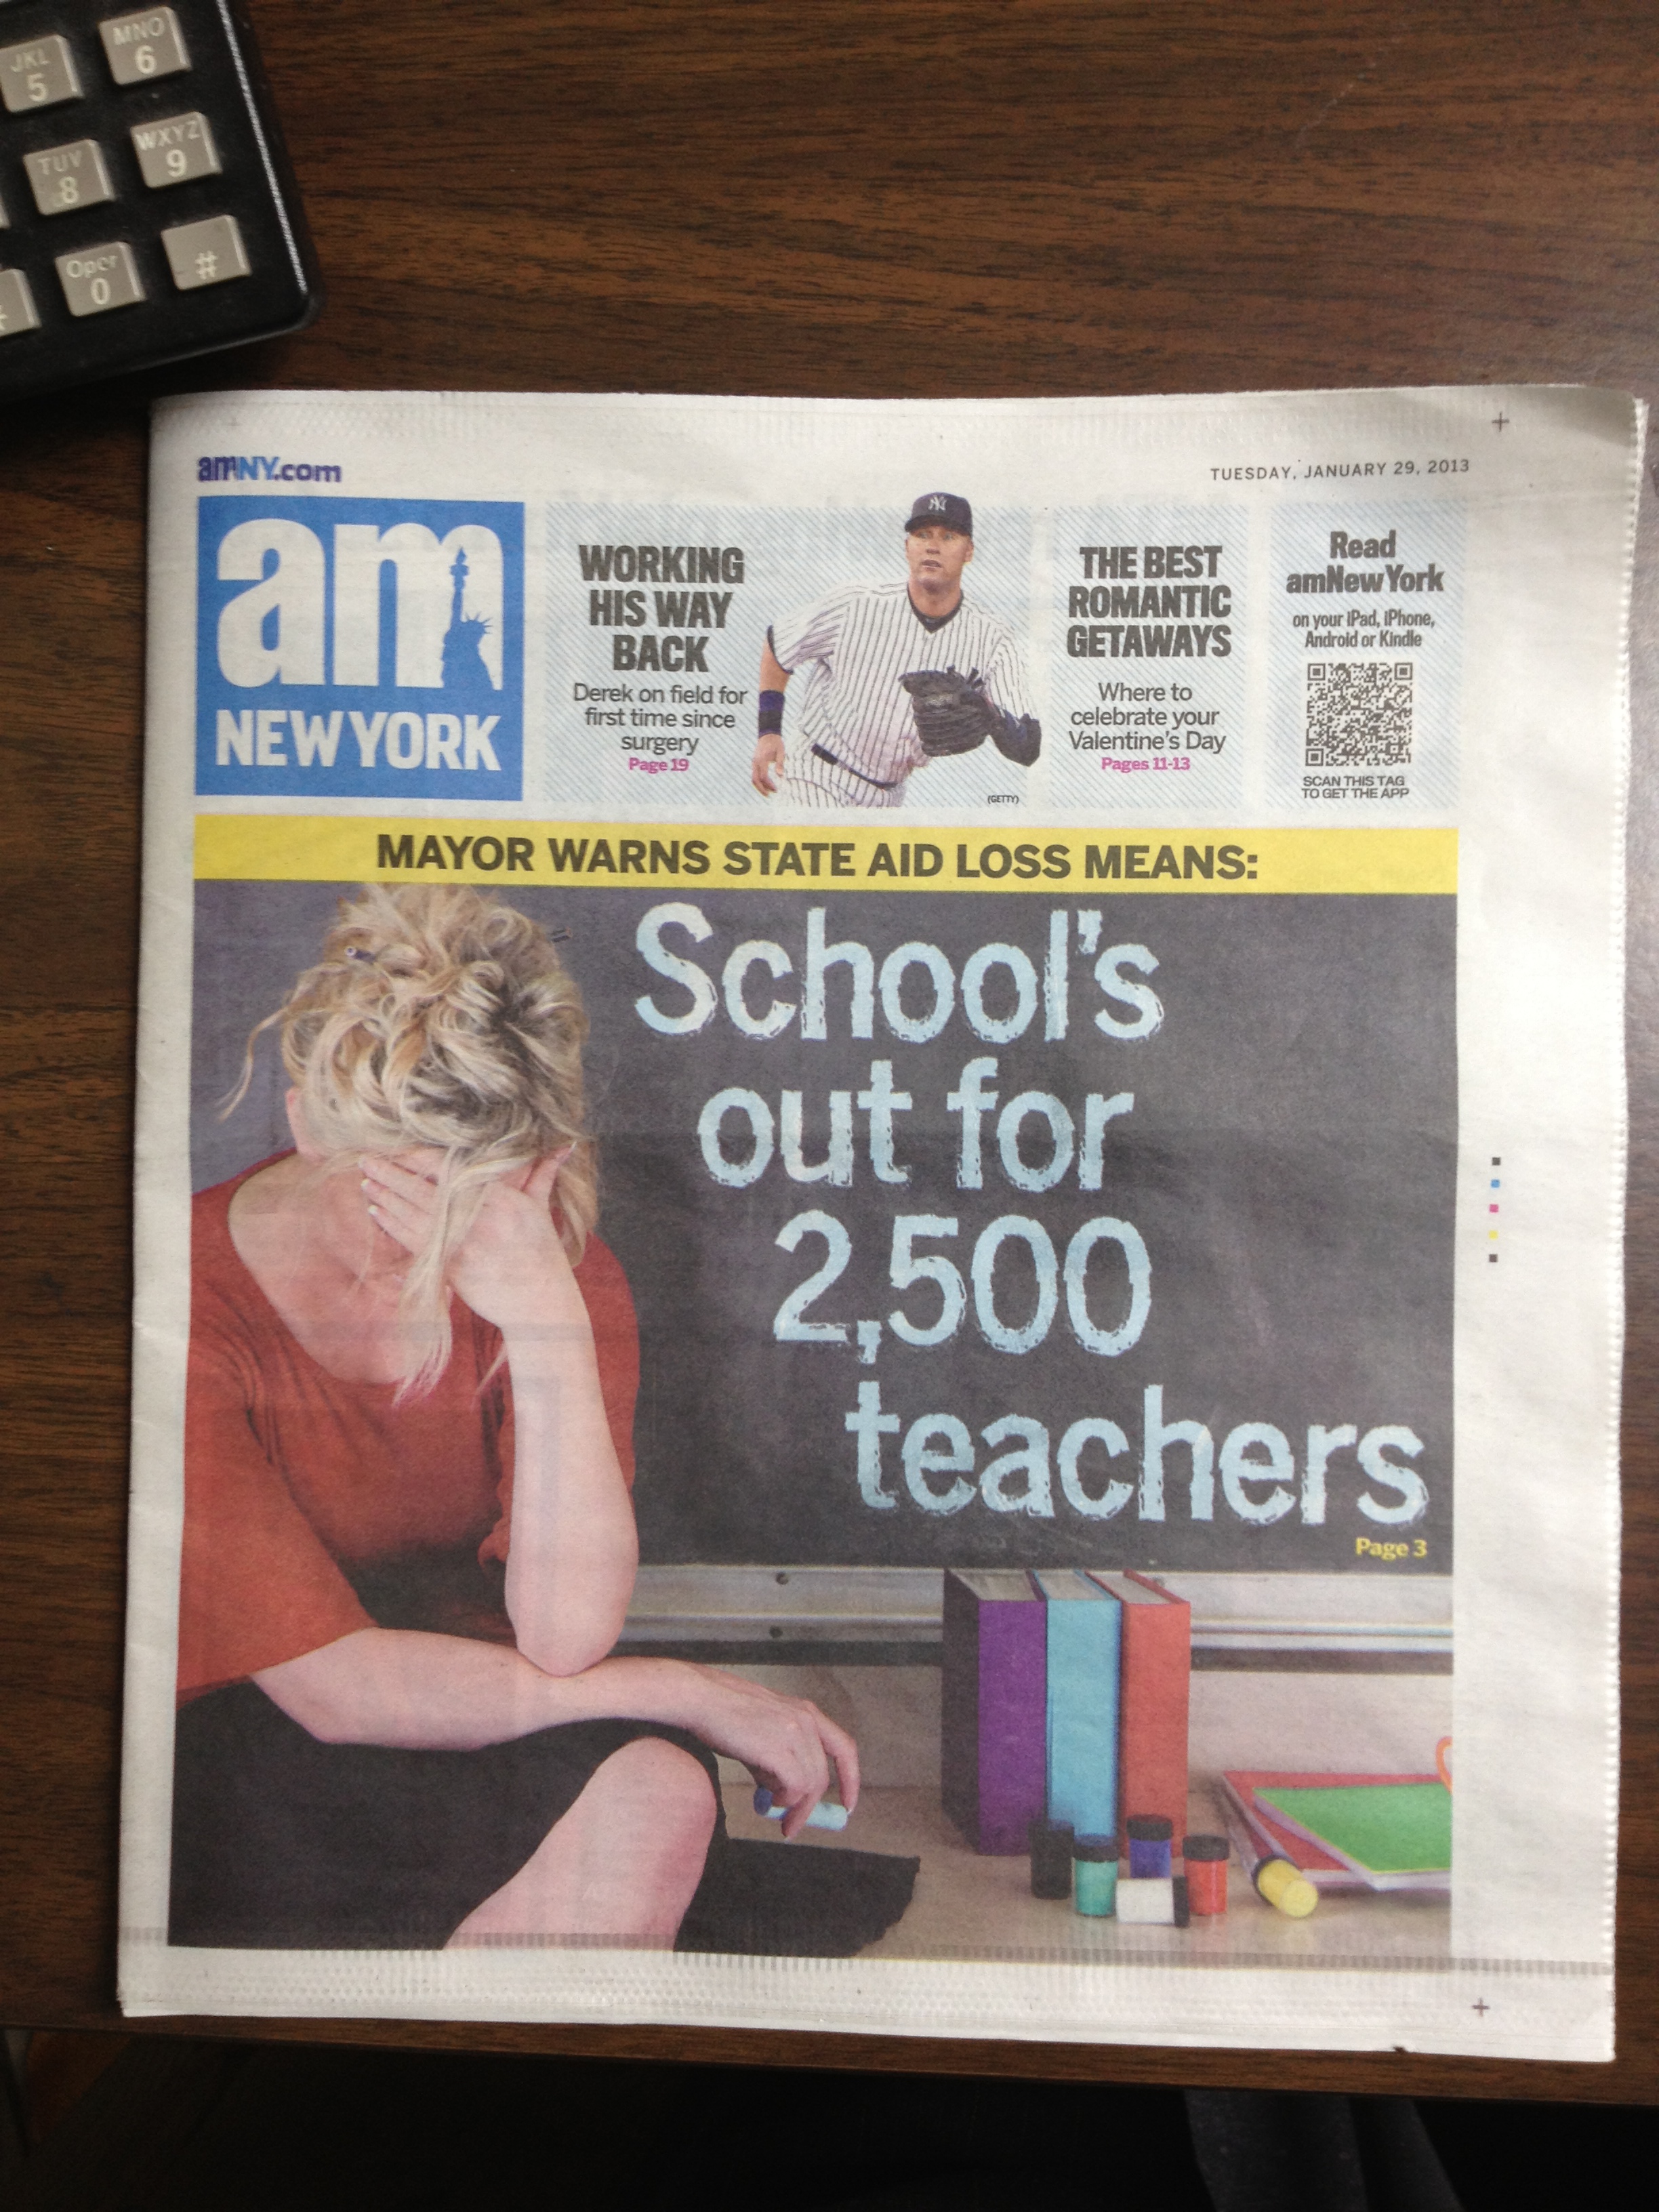 2500 TEACHERS OUT